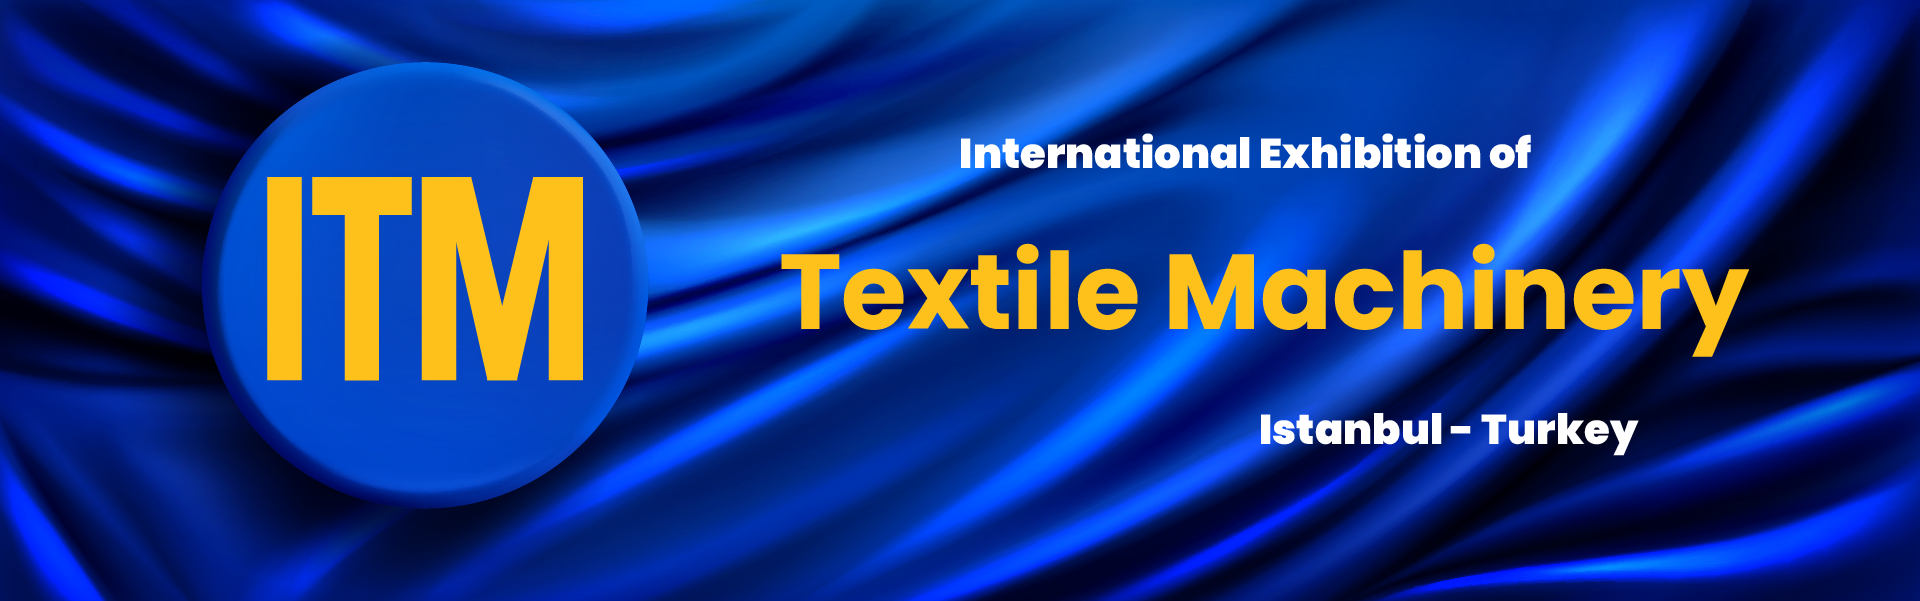 Textile Machinery Exhibition Istanbul Turkey